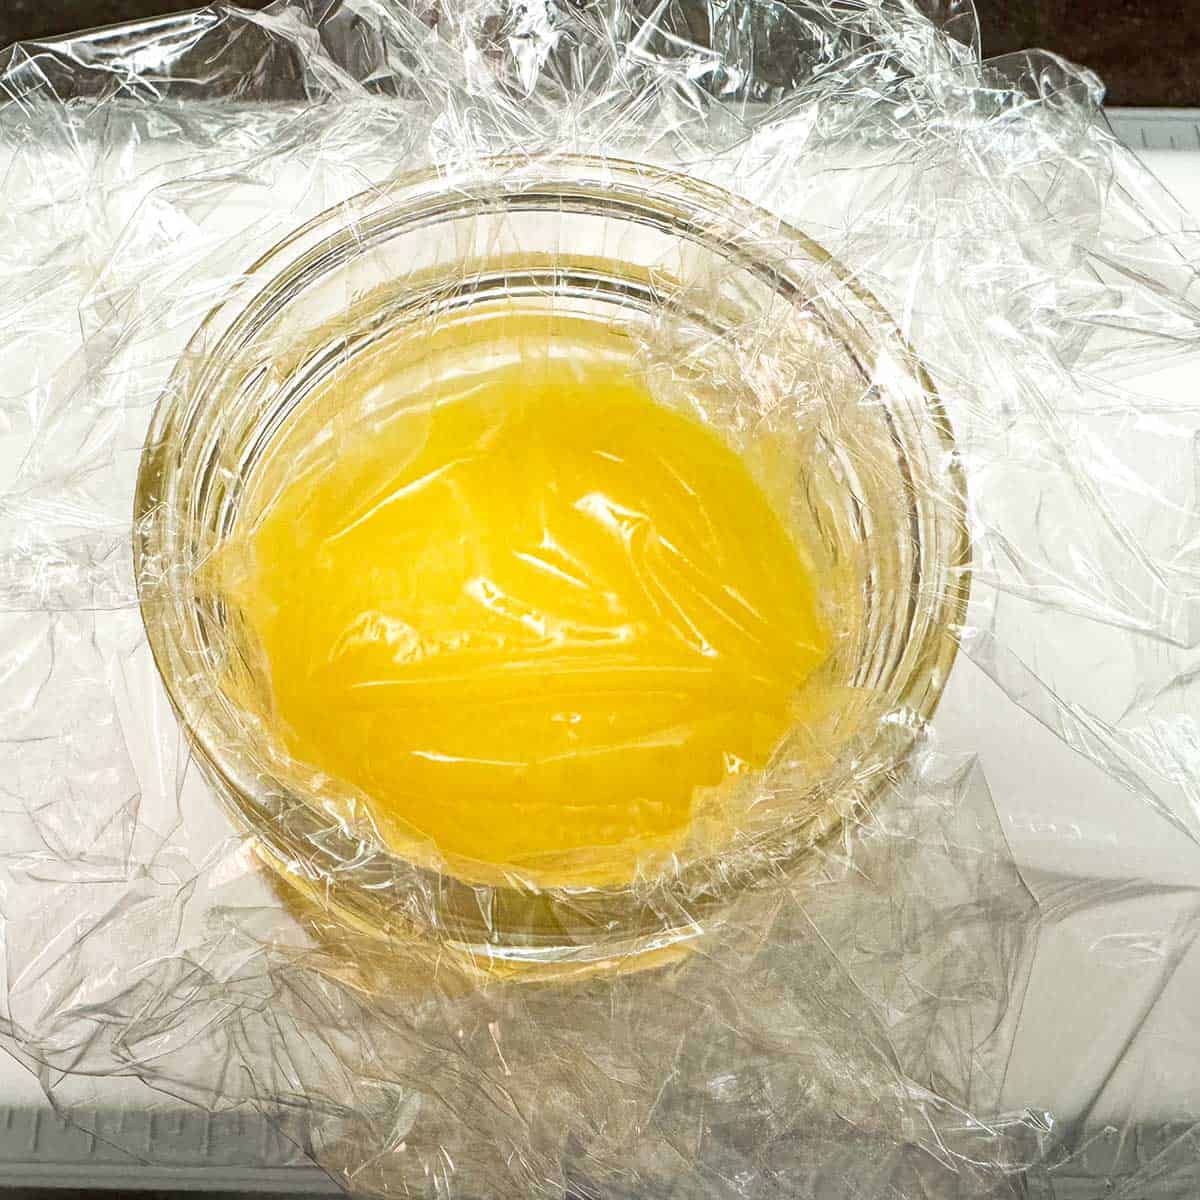 Plastic wrap laid against the lemon curd in the jar.